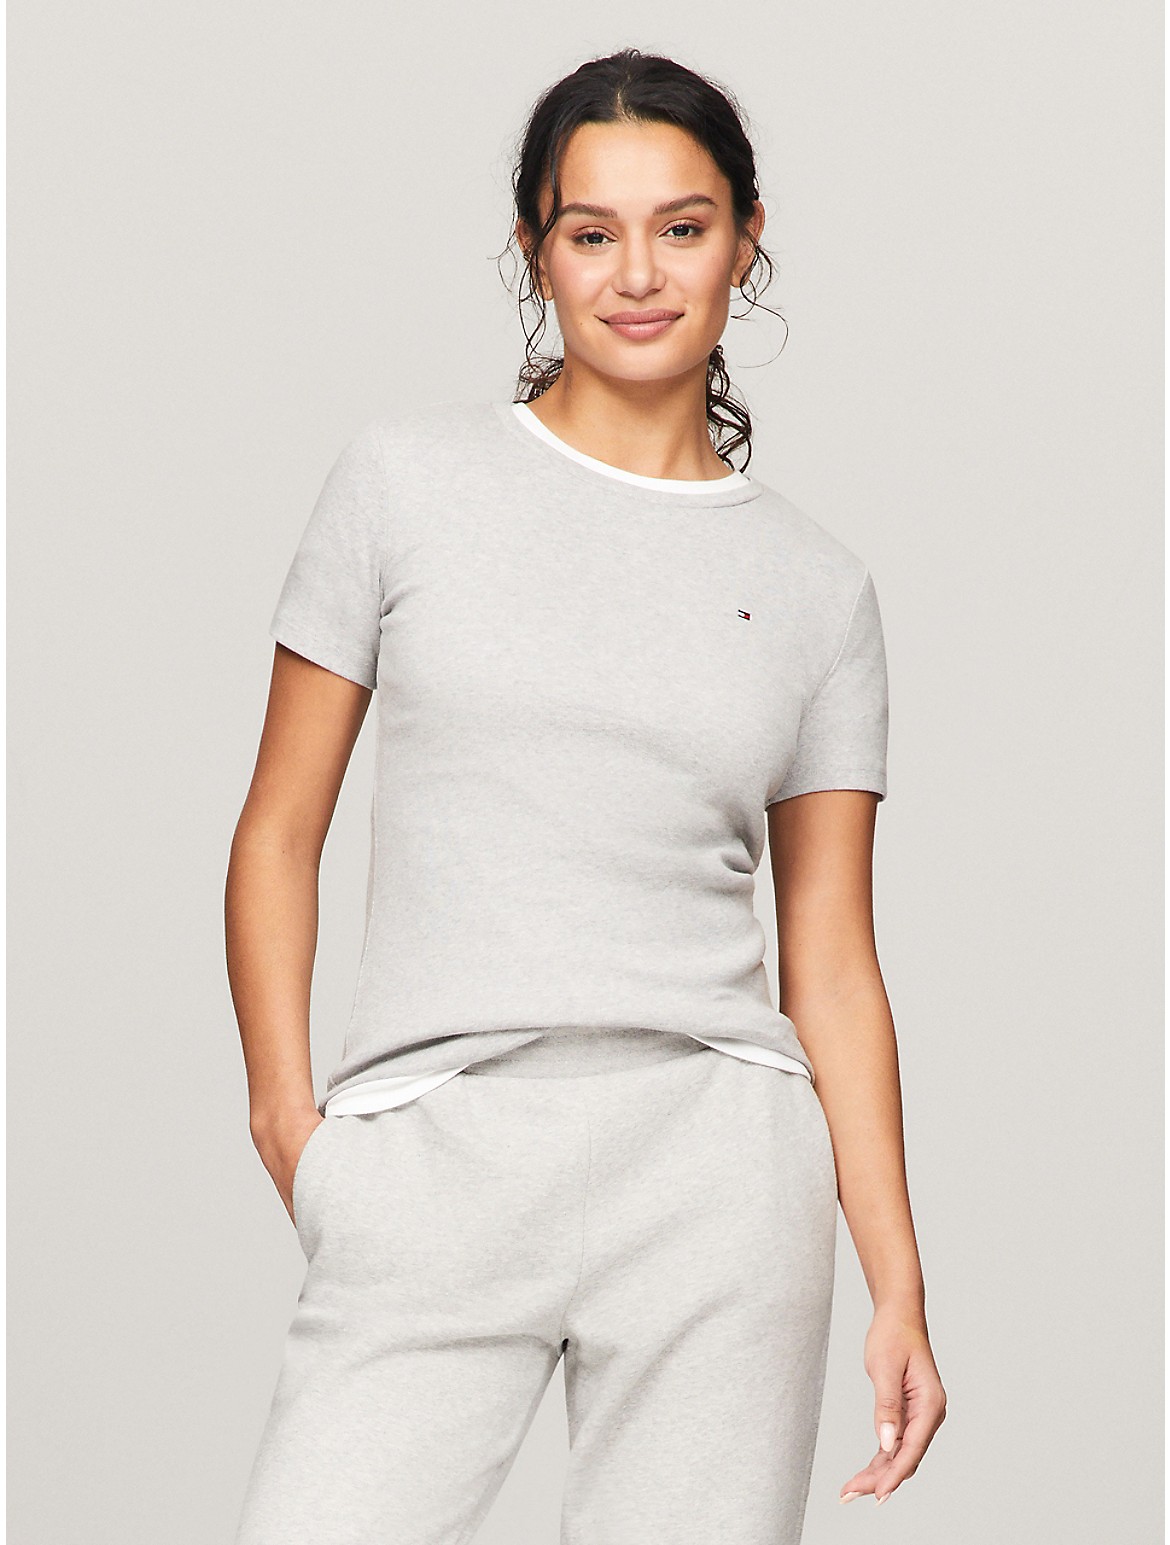 Tommy Hilfiger Women's Crewneck Favorite T-Shirt - Grey - M